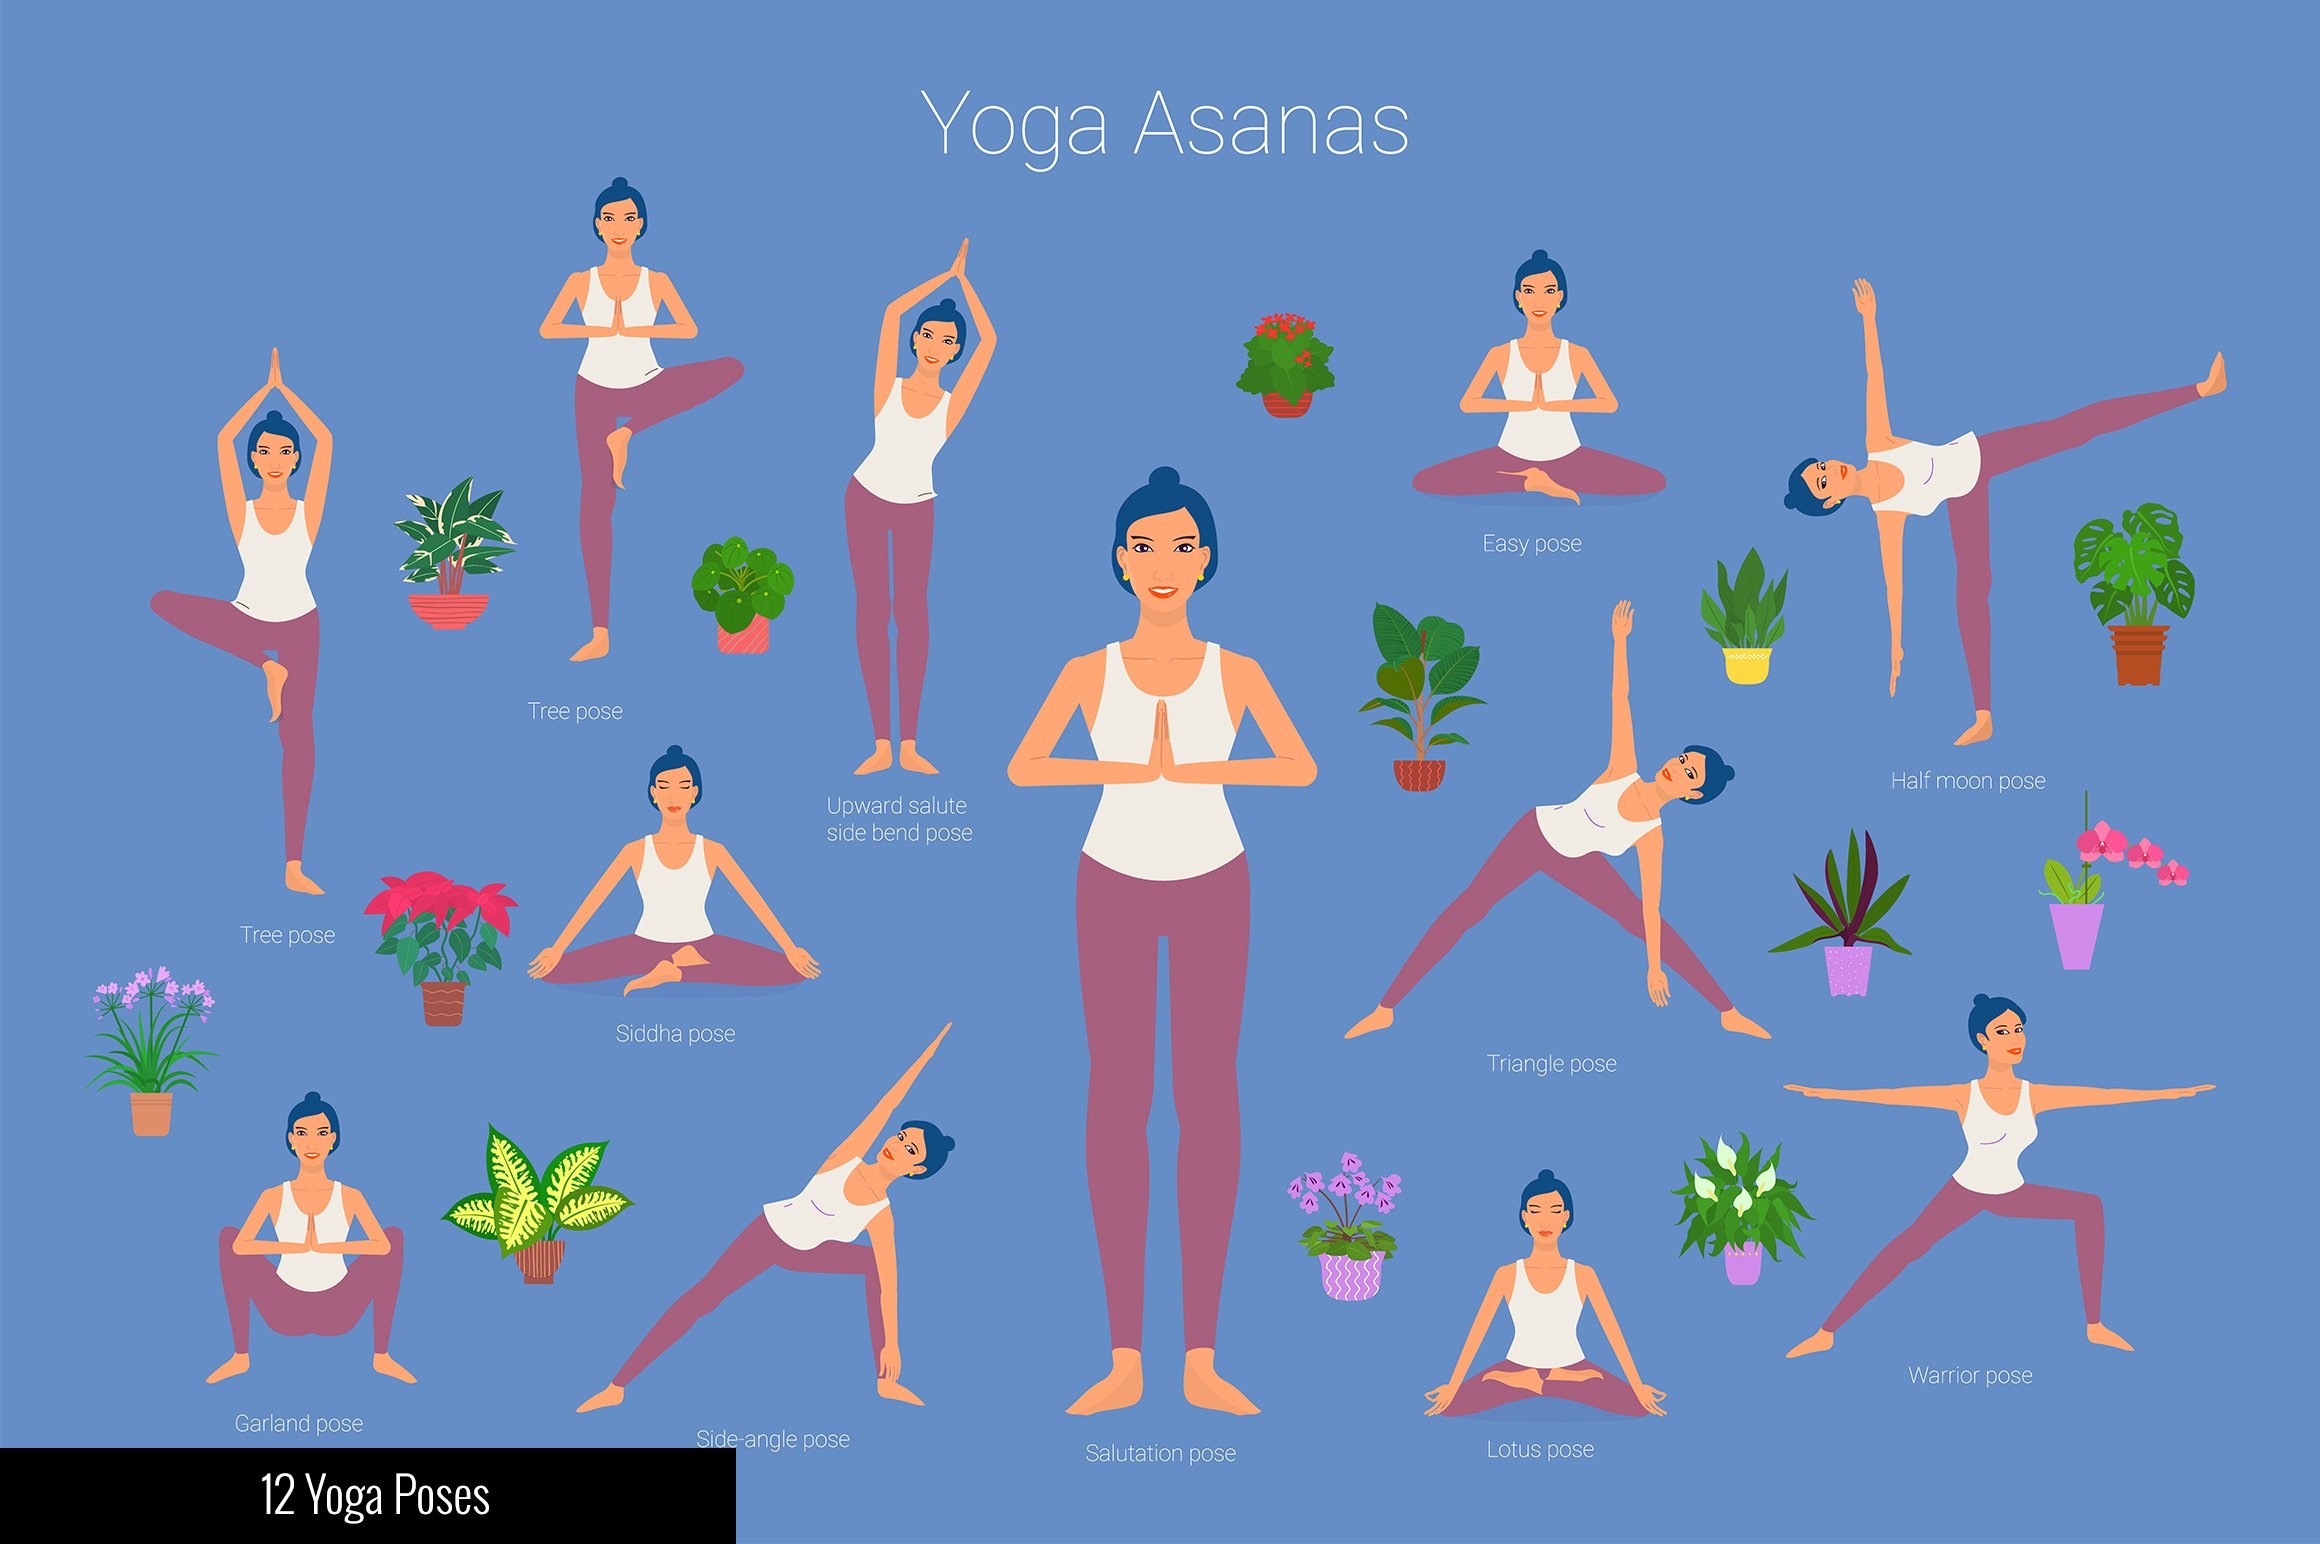 Classic yoga asanas on the blue background.